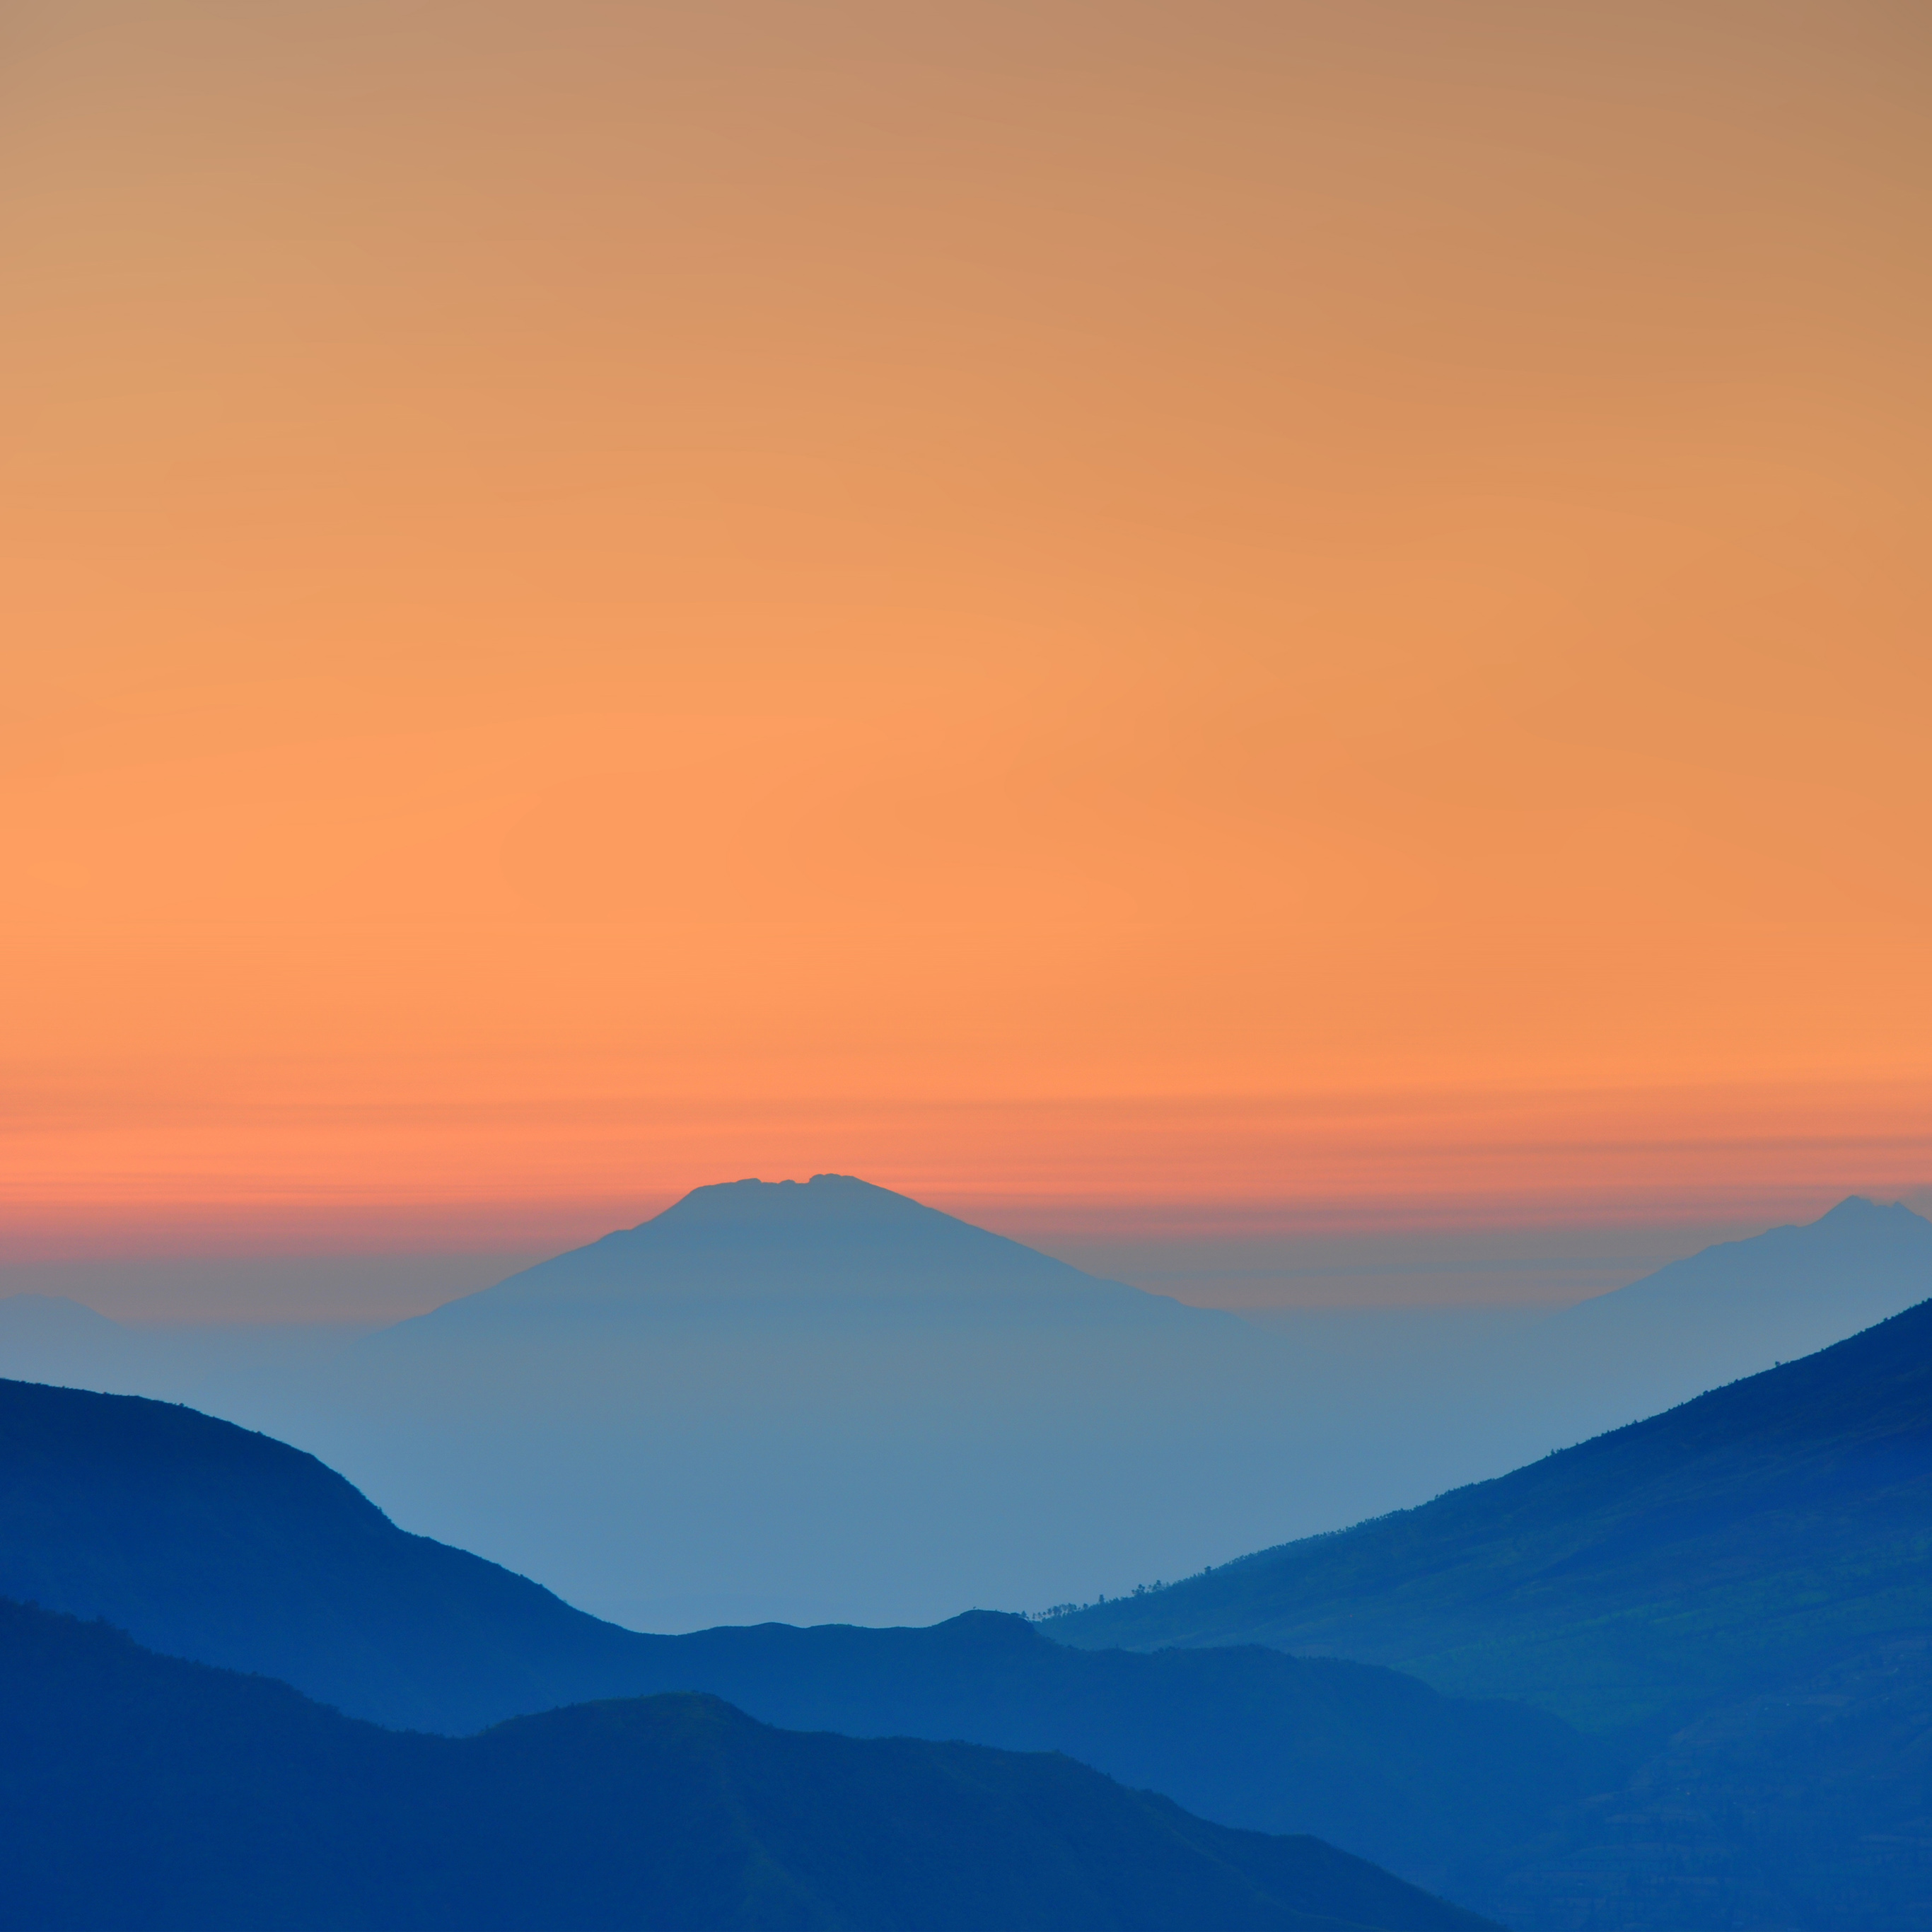 landscape-sunrise-mountain-nature-red-blue-40-wallpaper